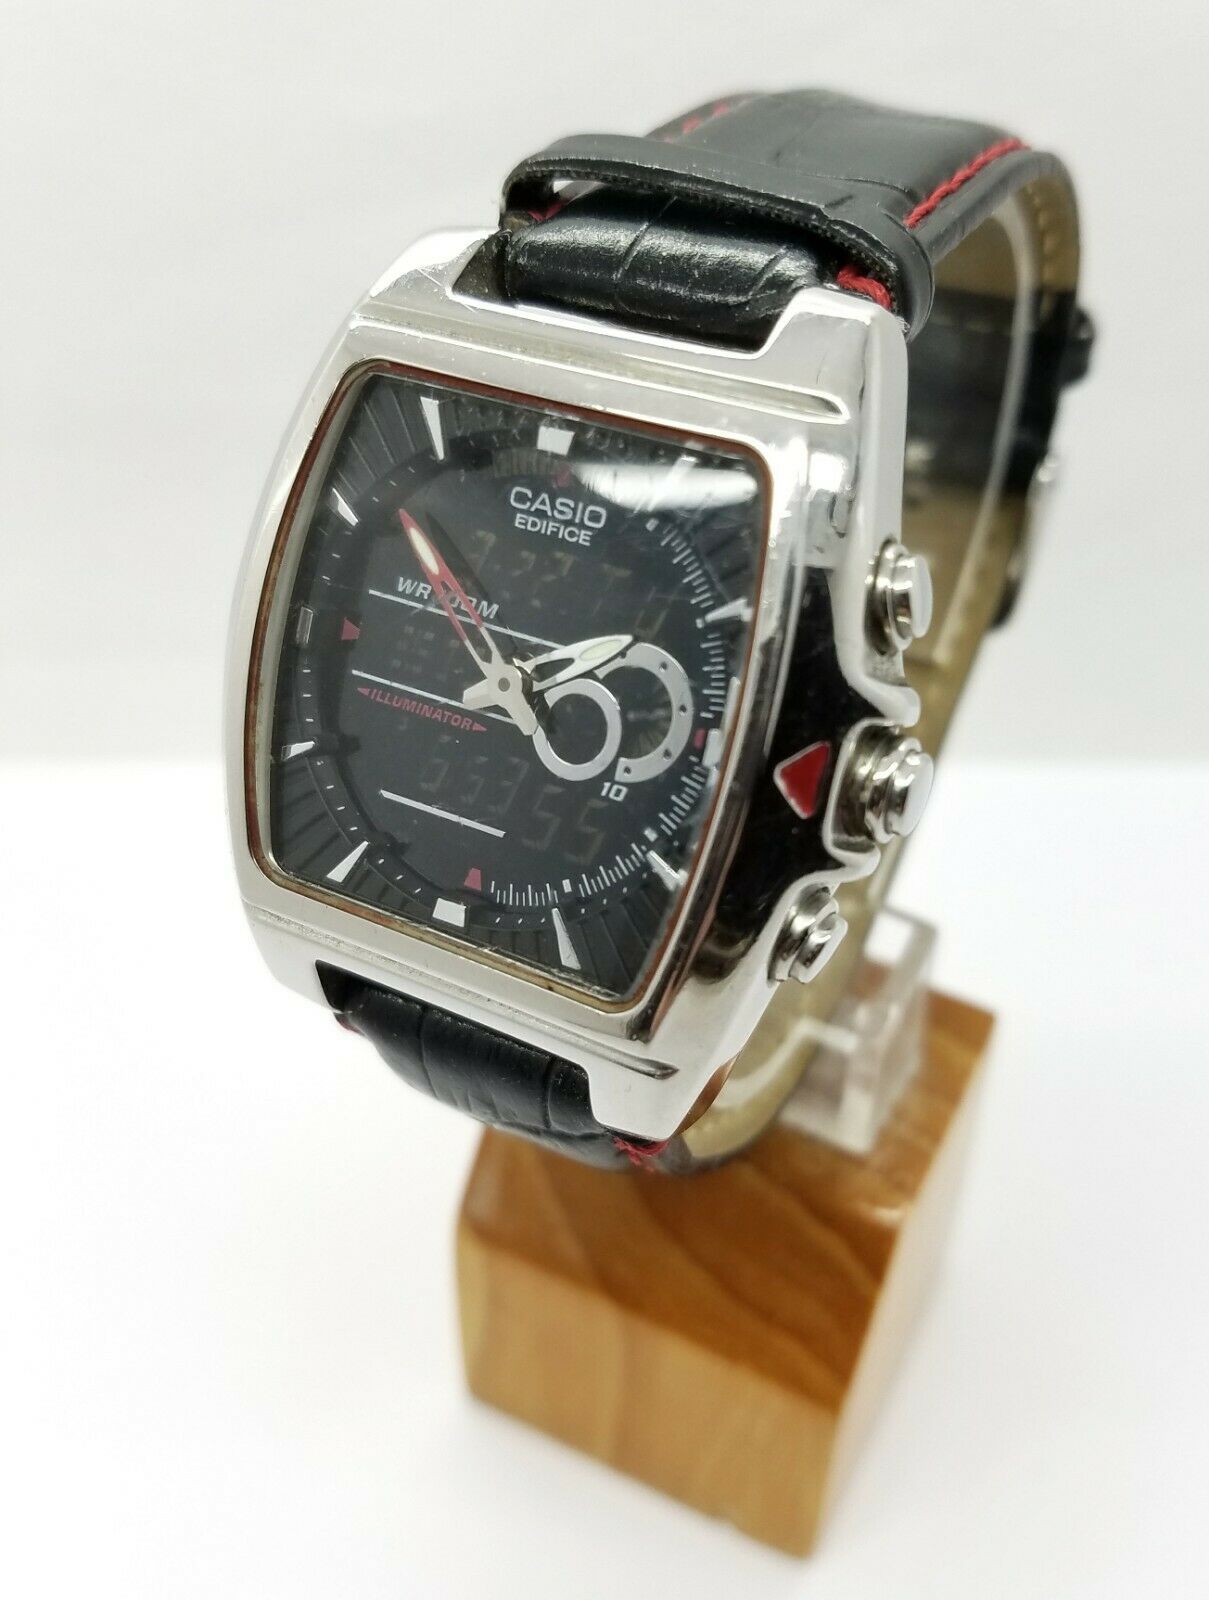 CASiO wristwatch cal. 4334 | WatchCharts